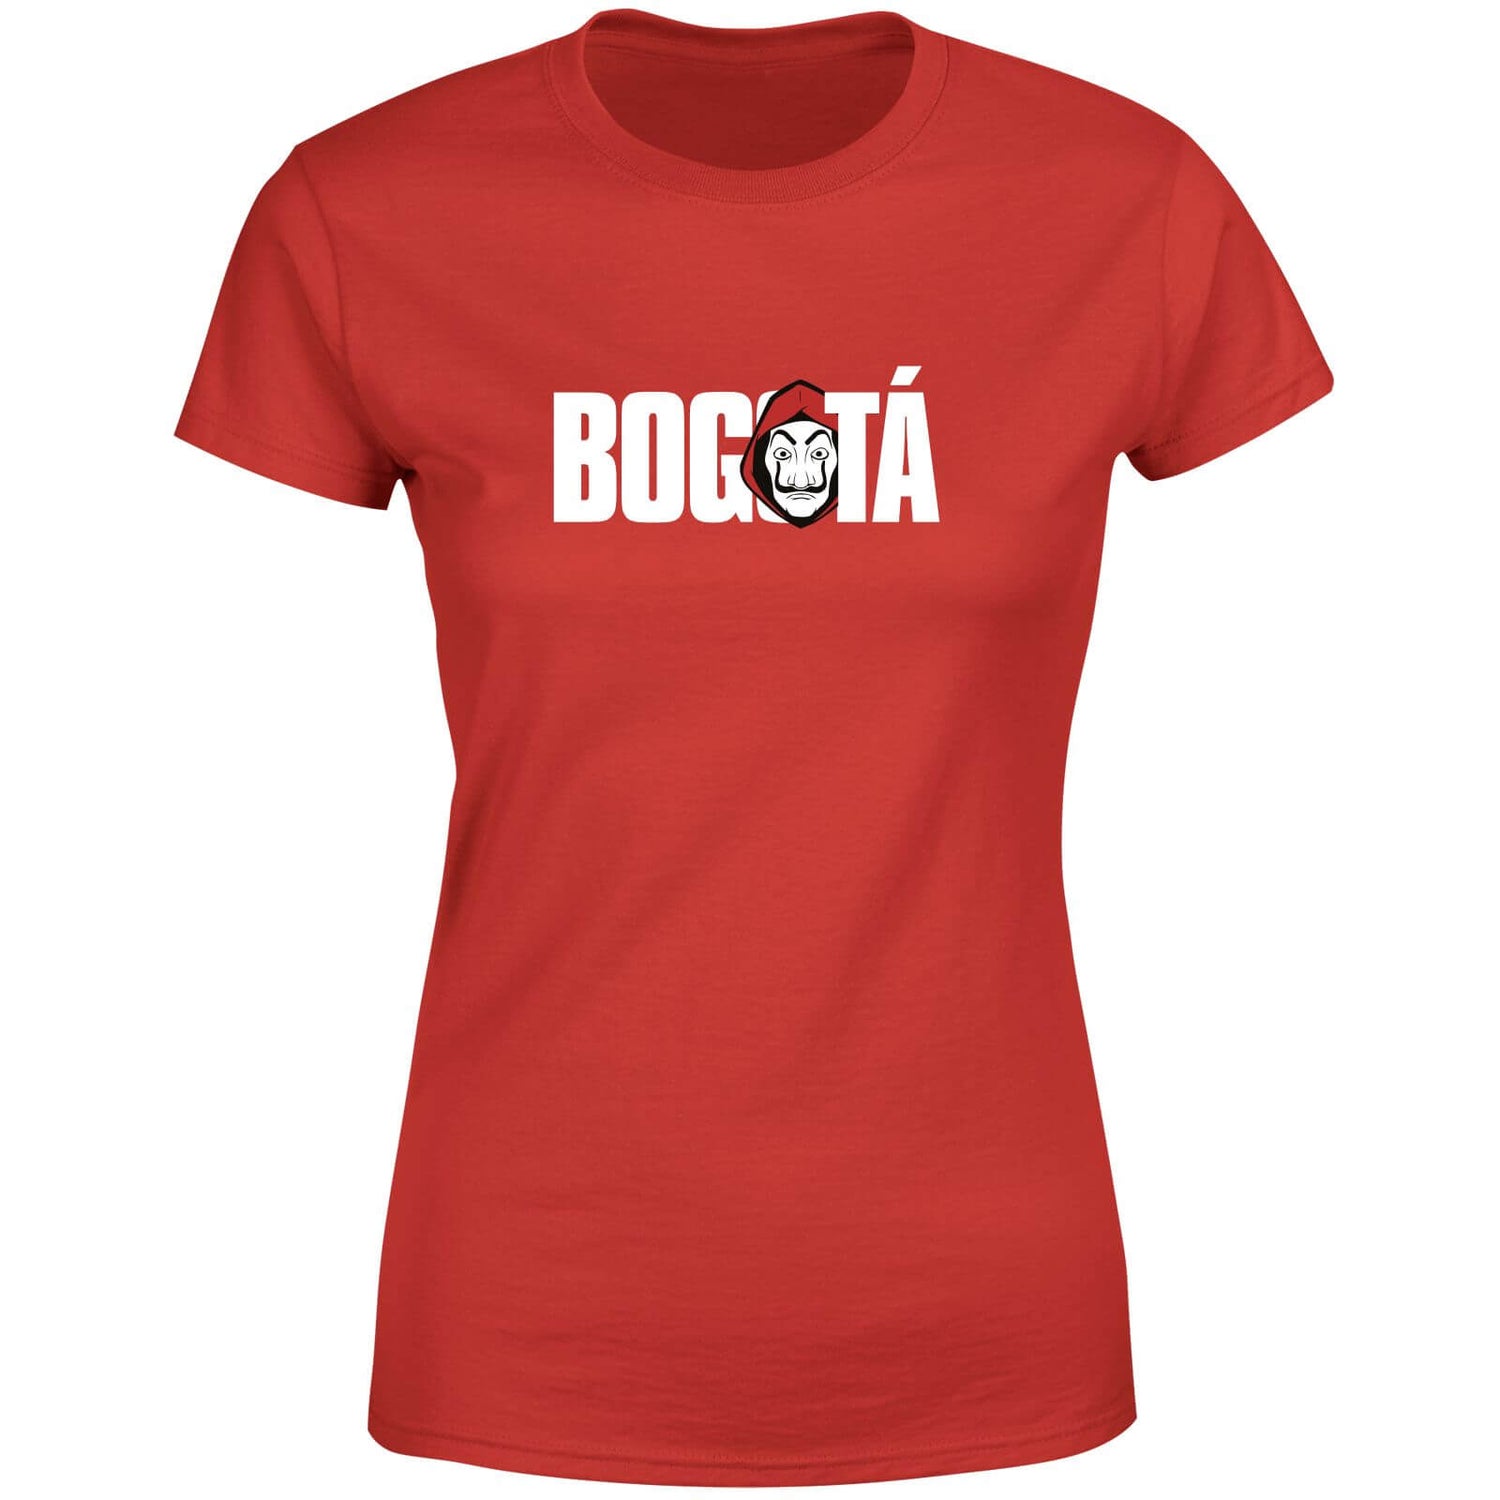 Camiseta para mujer de Money Heist Bogotá - Rojo